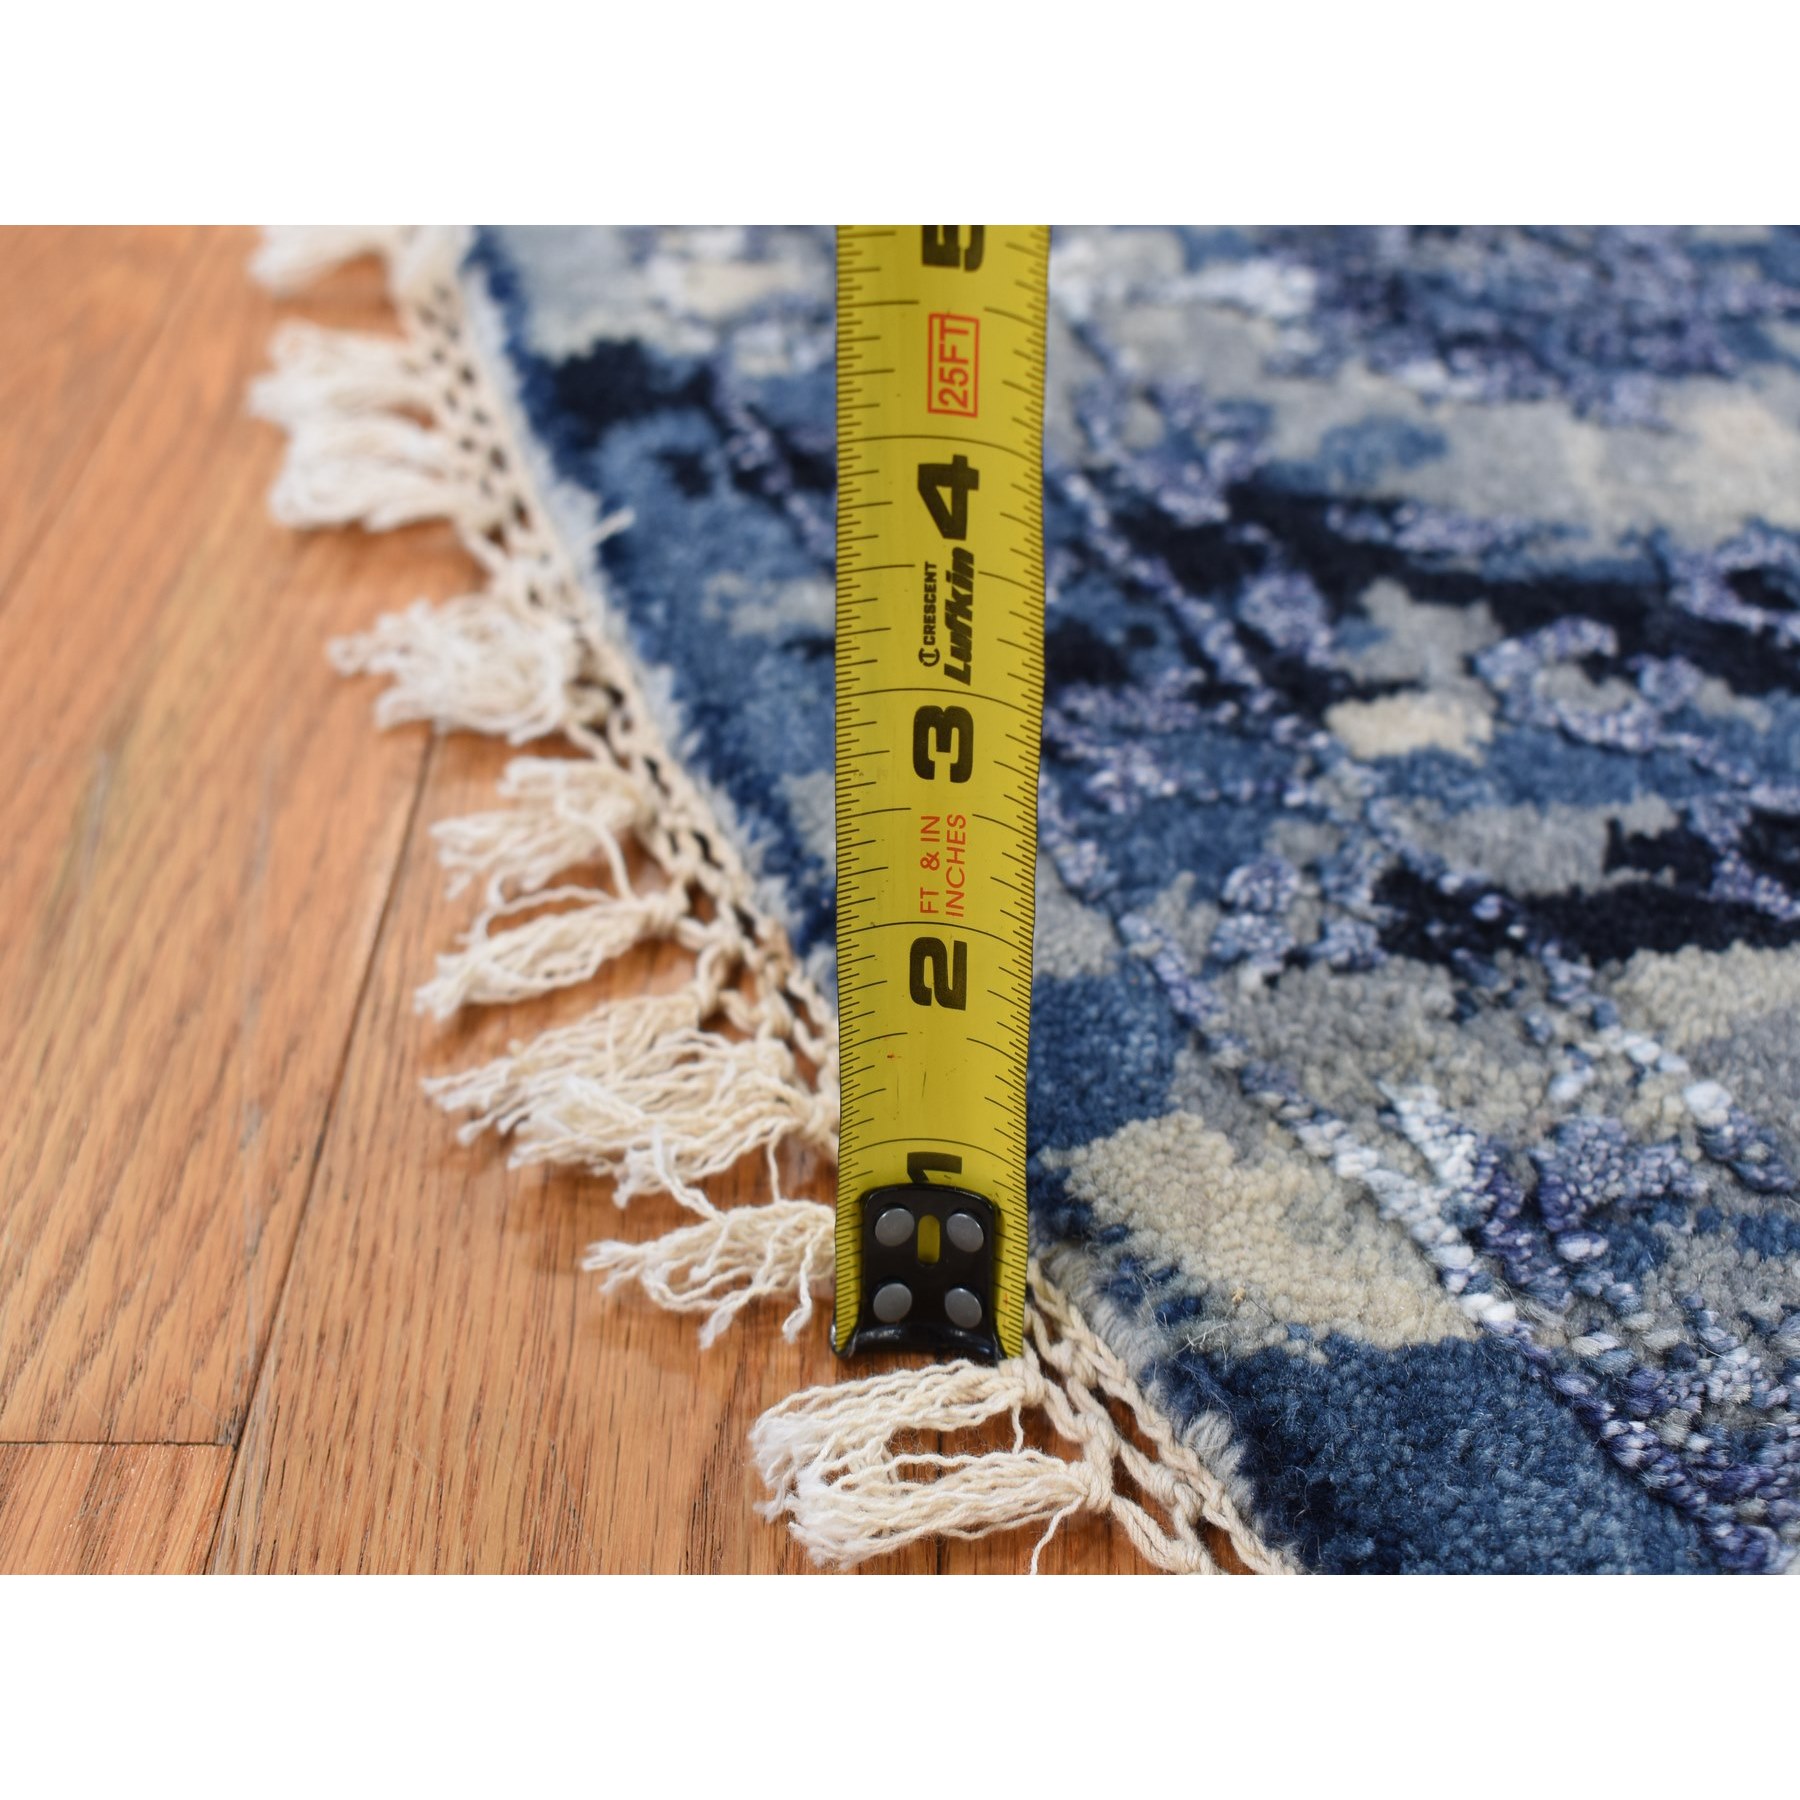 7'10"x7'10" Millennium Blue, Wool and Silk, Shibori Design, Tone On Tone, Hand Woven, Round Oriental Rug 